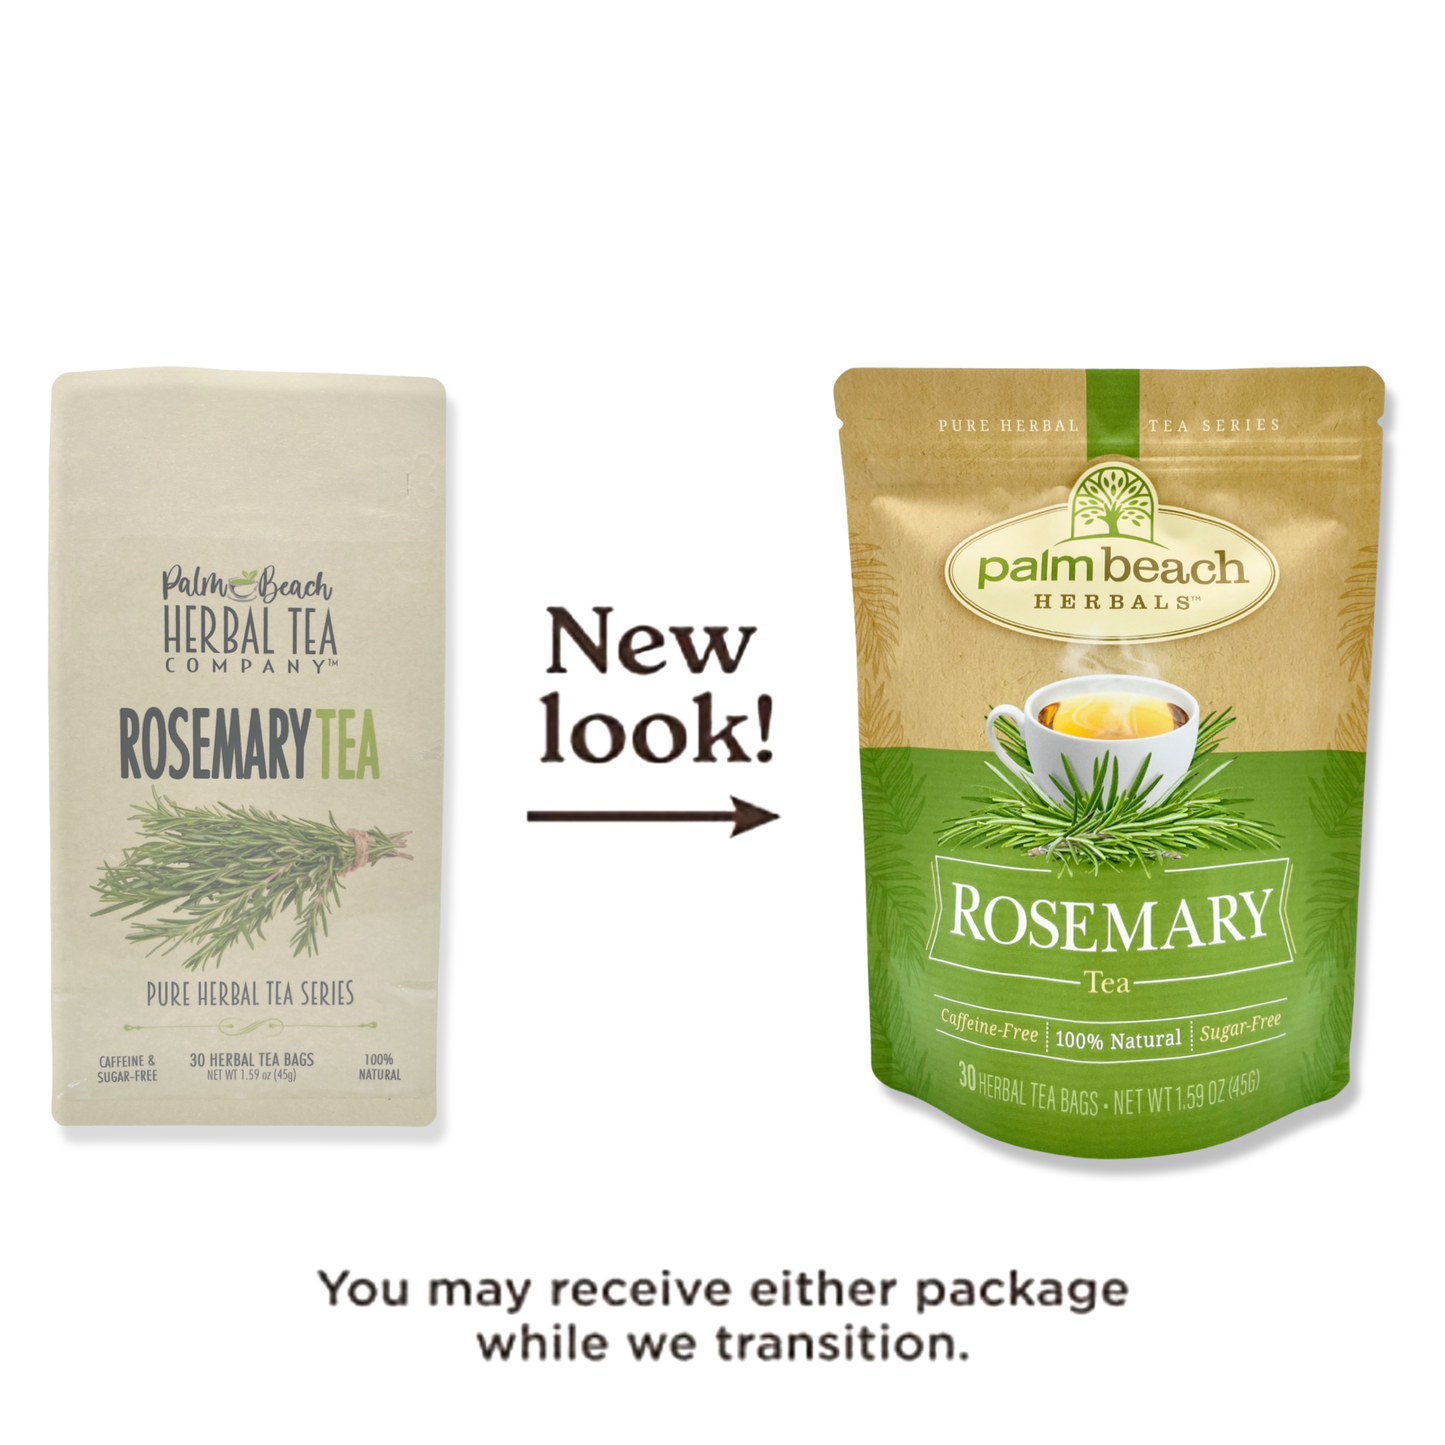 Rosemary Tea